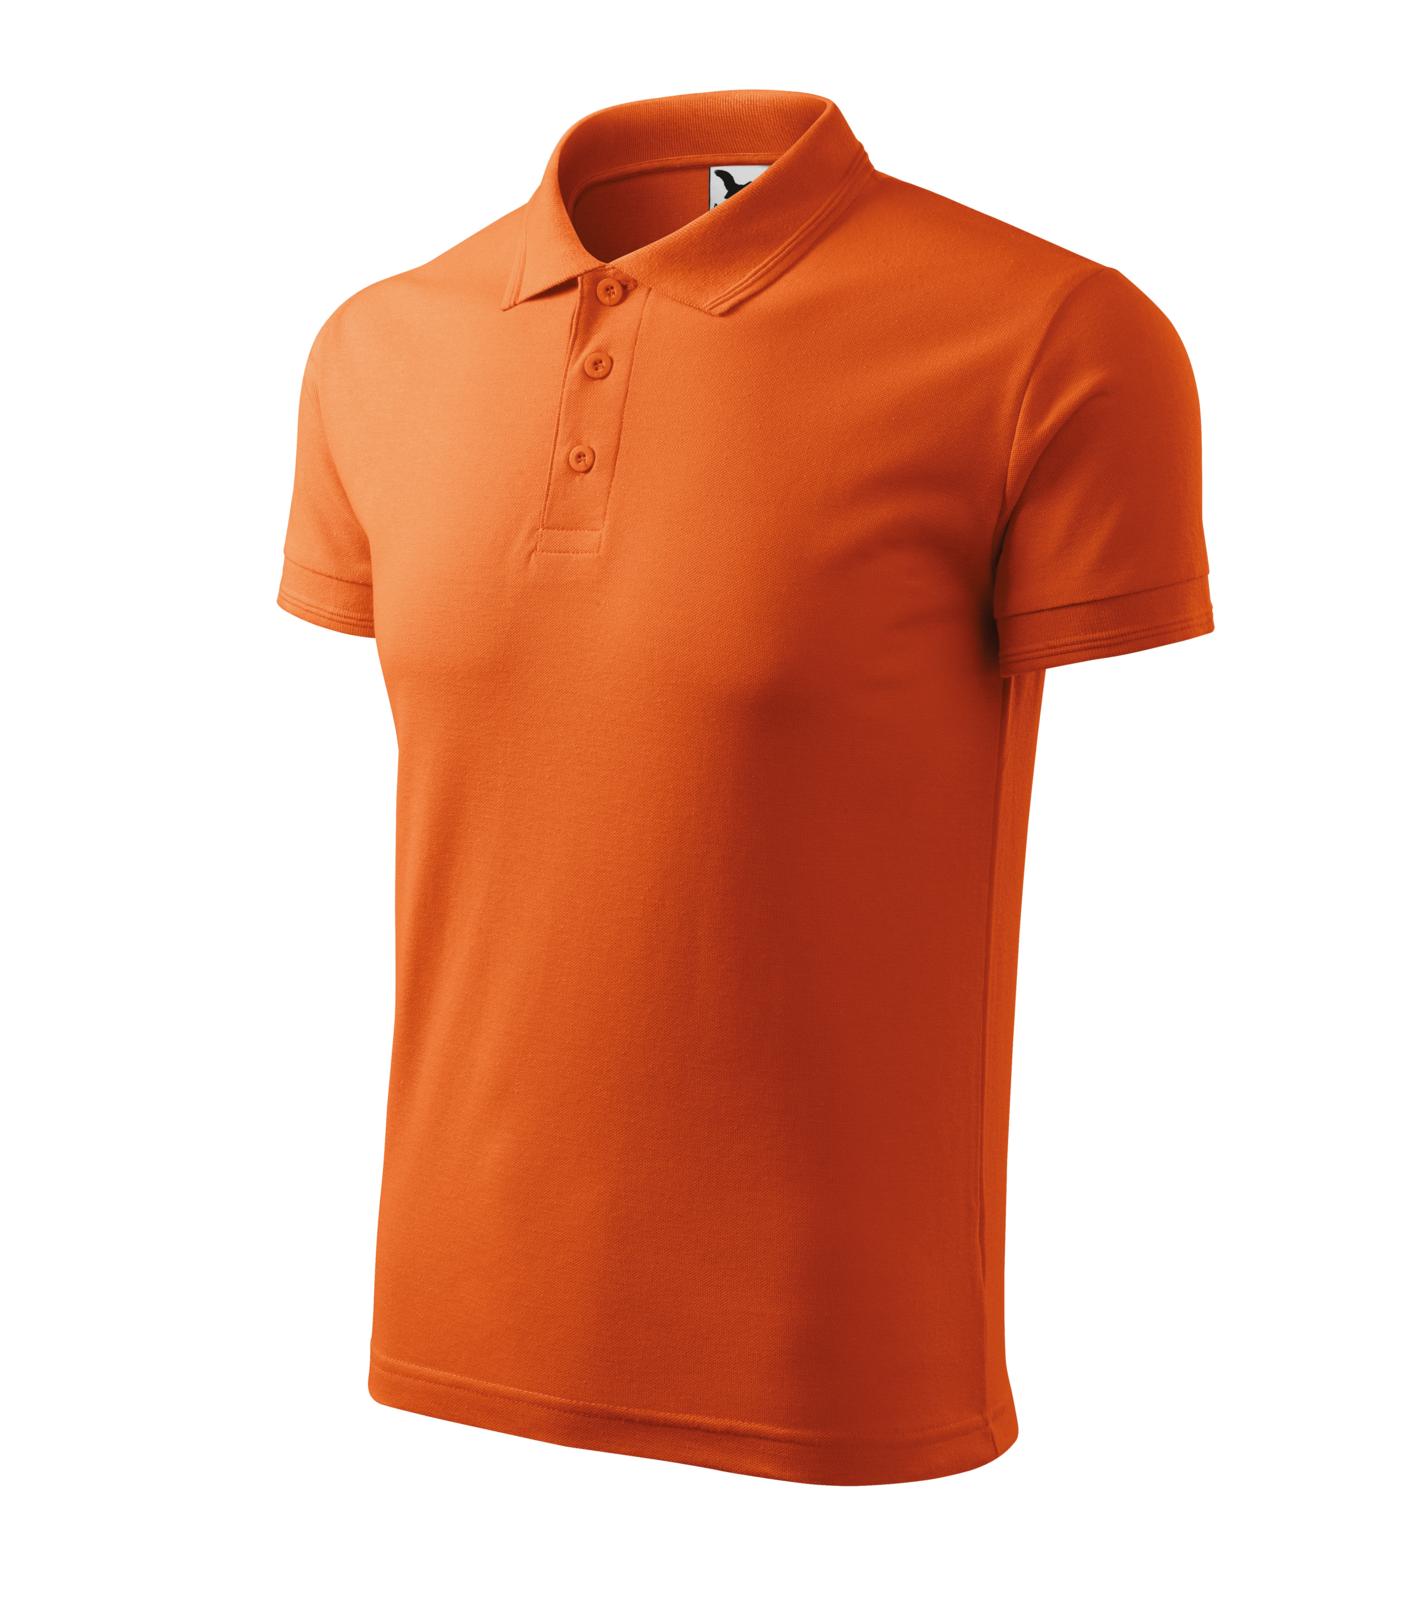 Pique Polo Polokošile pánská Barva: oranžová, Velikost: S